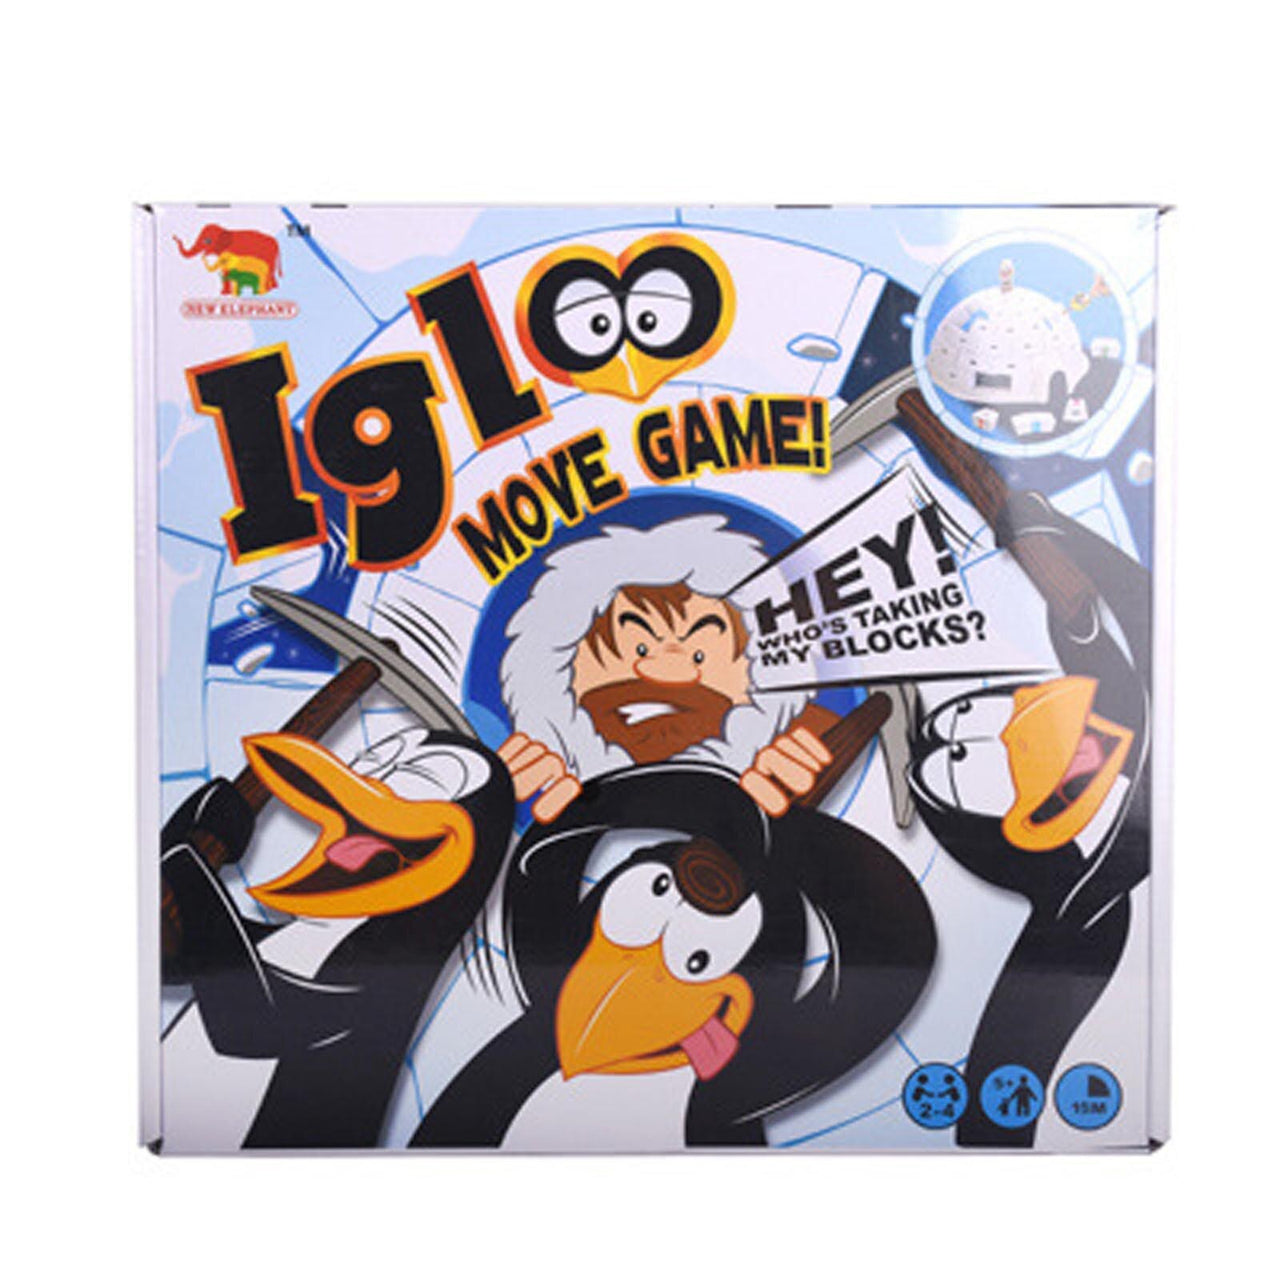 Igloo Game™ - Jäinen haaste! - Lastenpeli